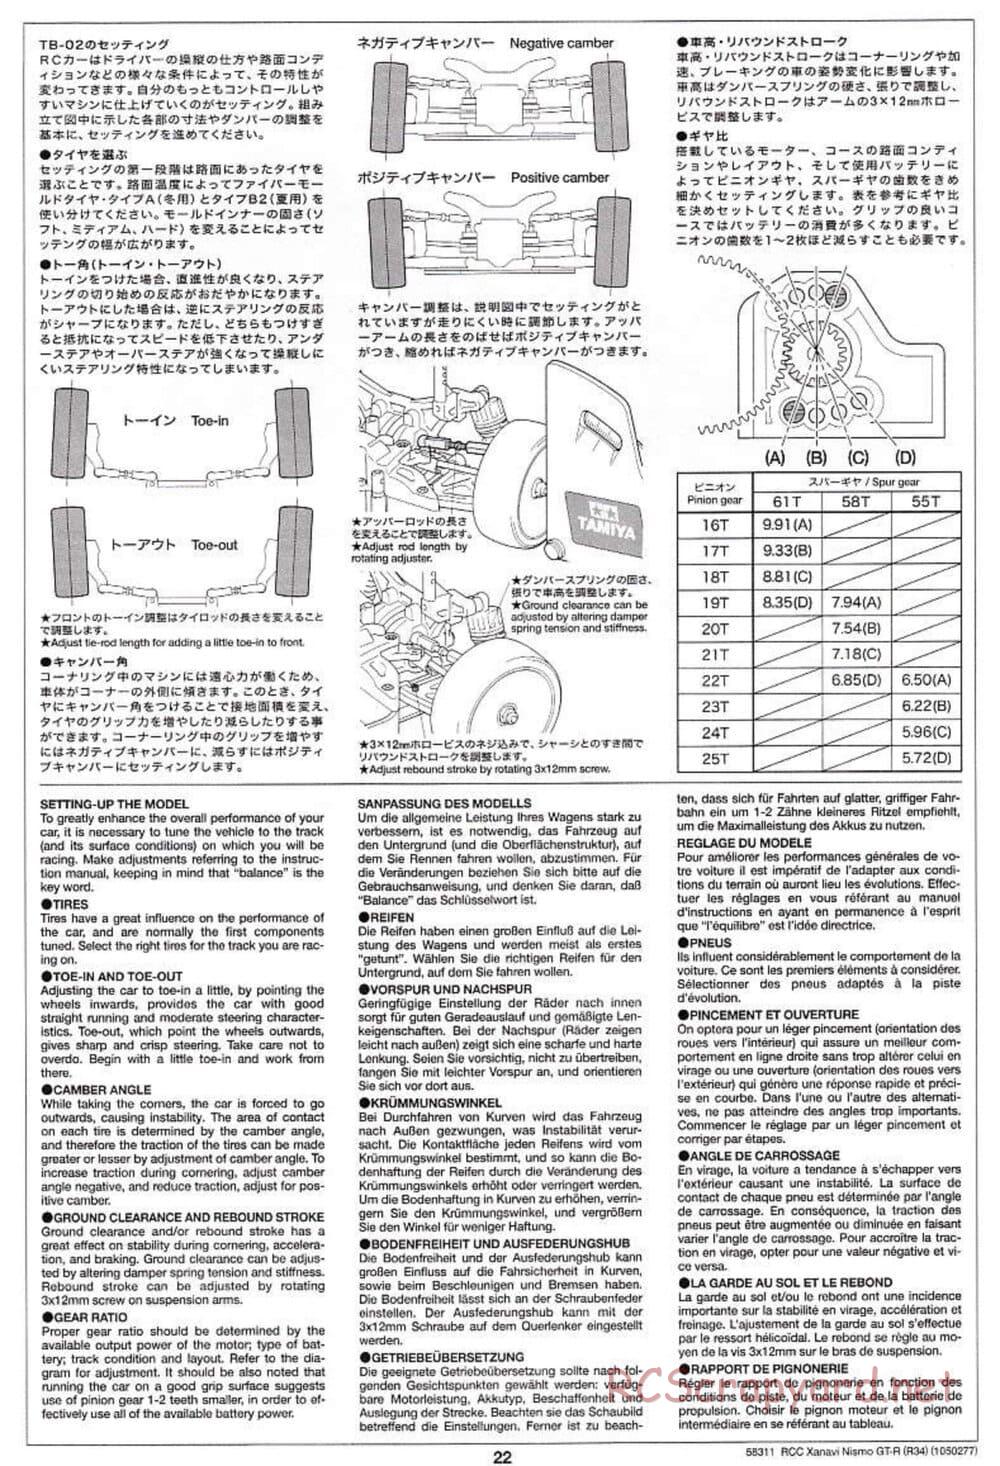 Tamiya - Xanavi Nismo GT-R (R34) - TB-02 Chassis - Manual - Page 22